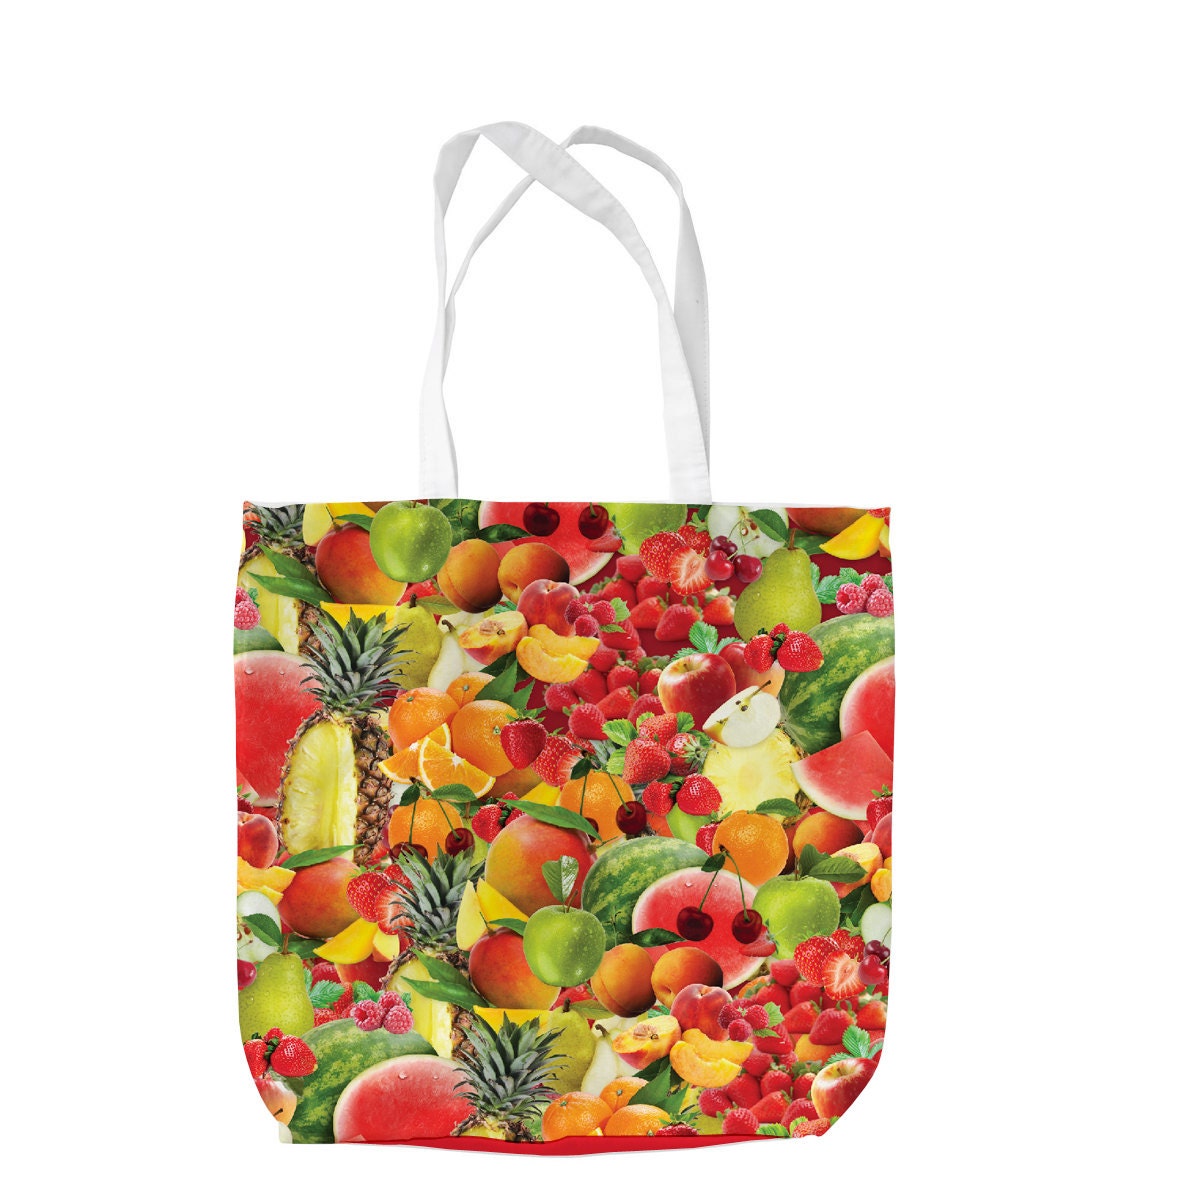 Fruit Salad Design Tote Bag Shopping Bag Beach Bag School Bag | Etsy